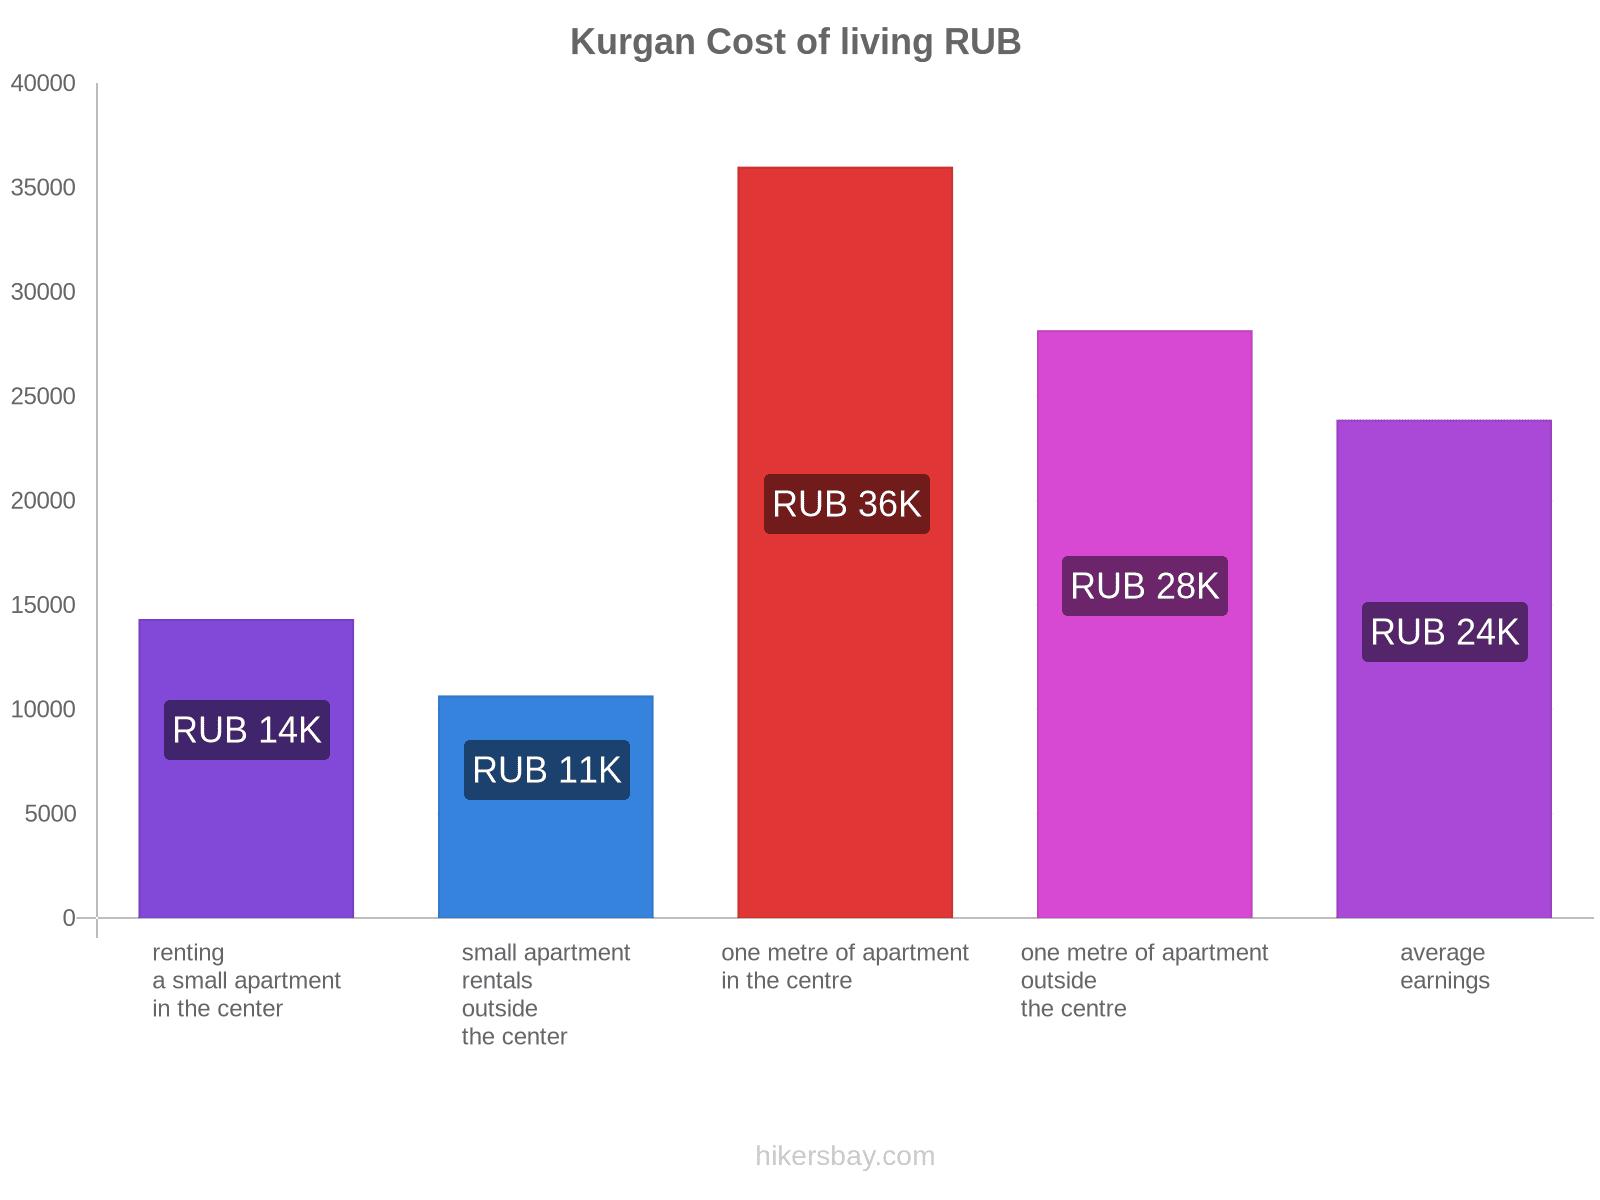 Kurgan cost of living hikersbay.com